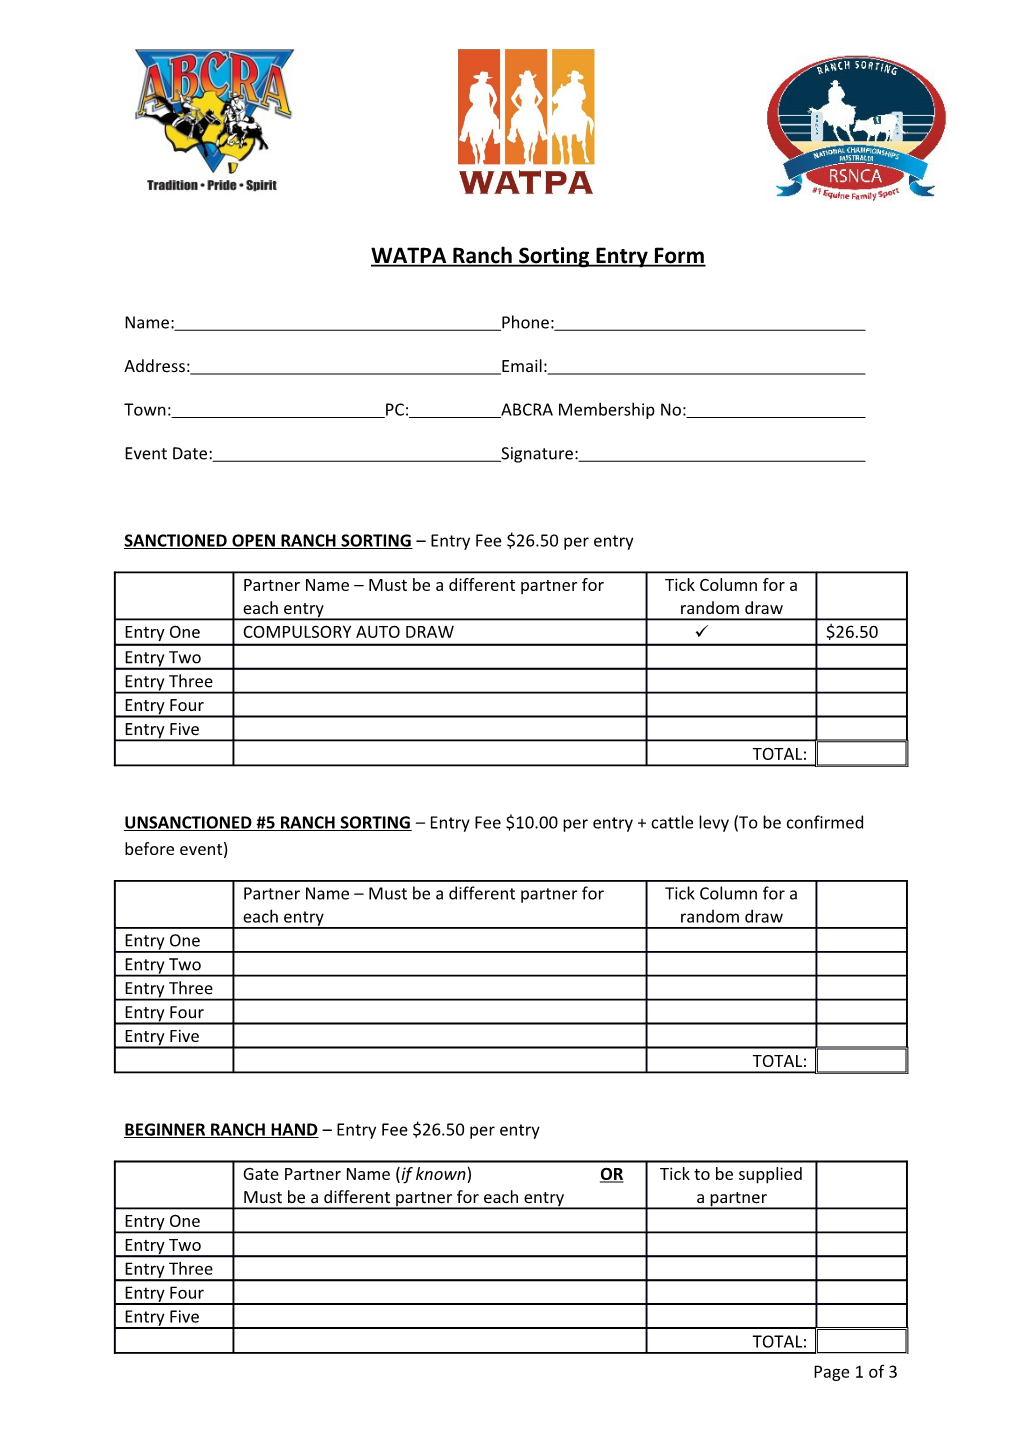 WATPA Ranch Sorting Entry Form